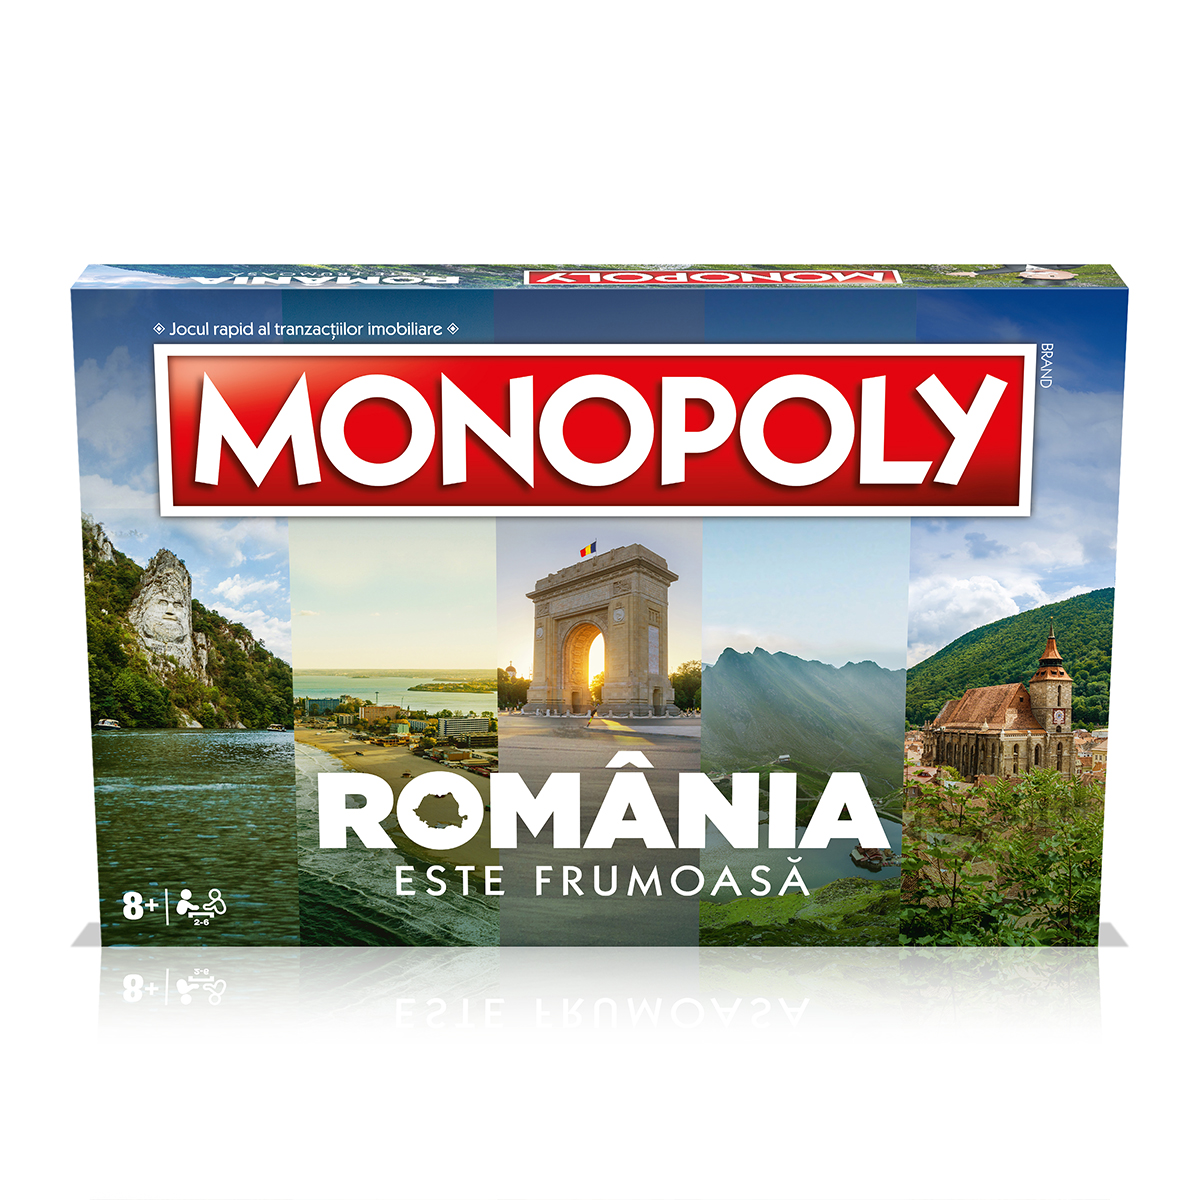 genius Waist forecast MONOPOLY ROMANIA - Monopoly